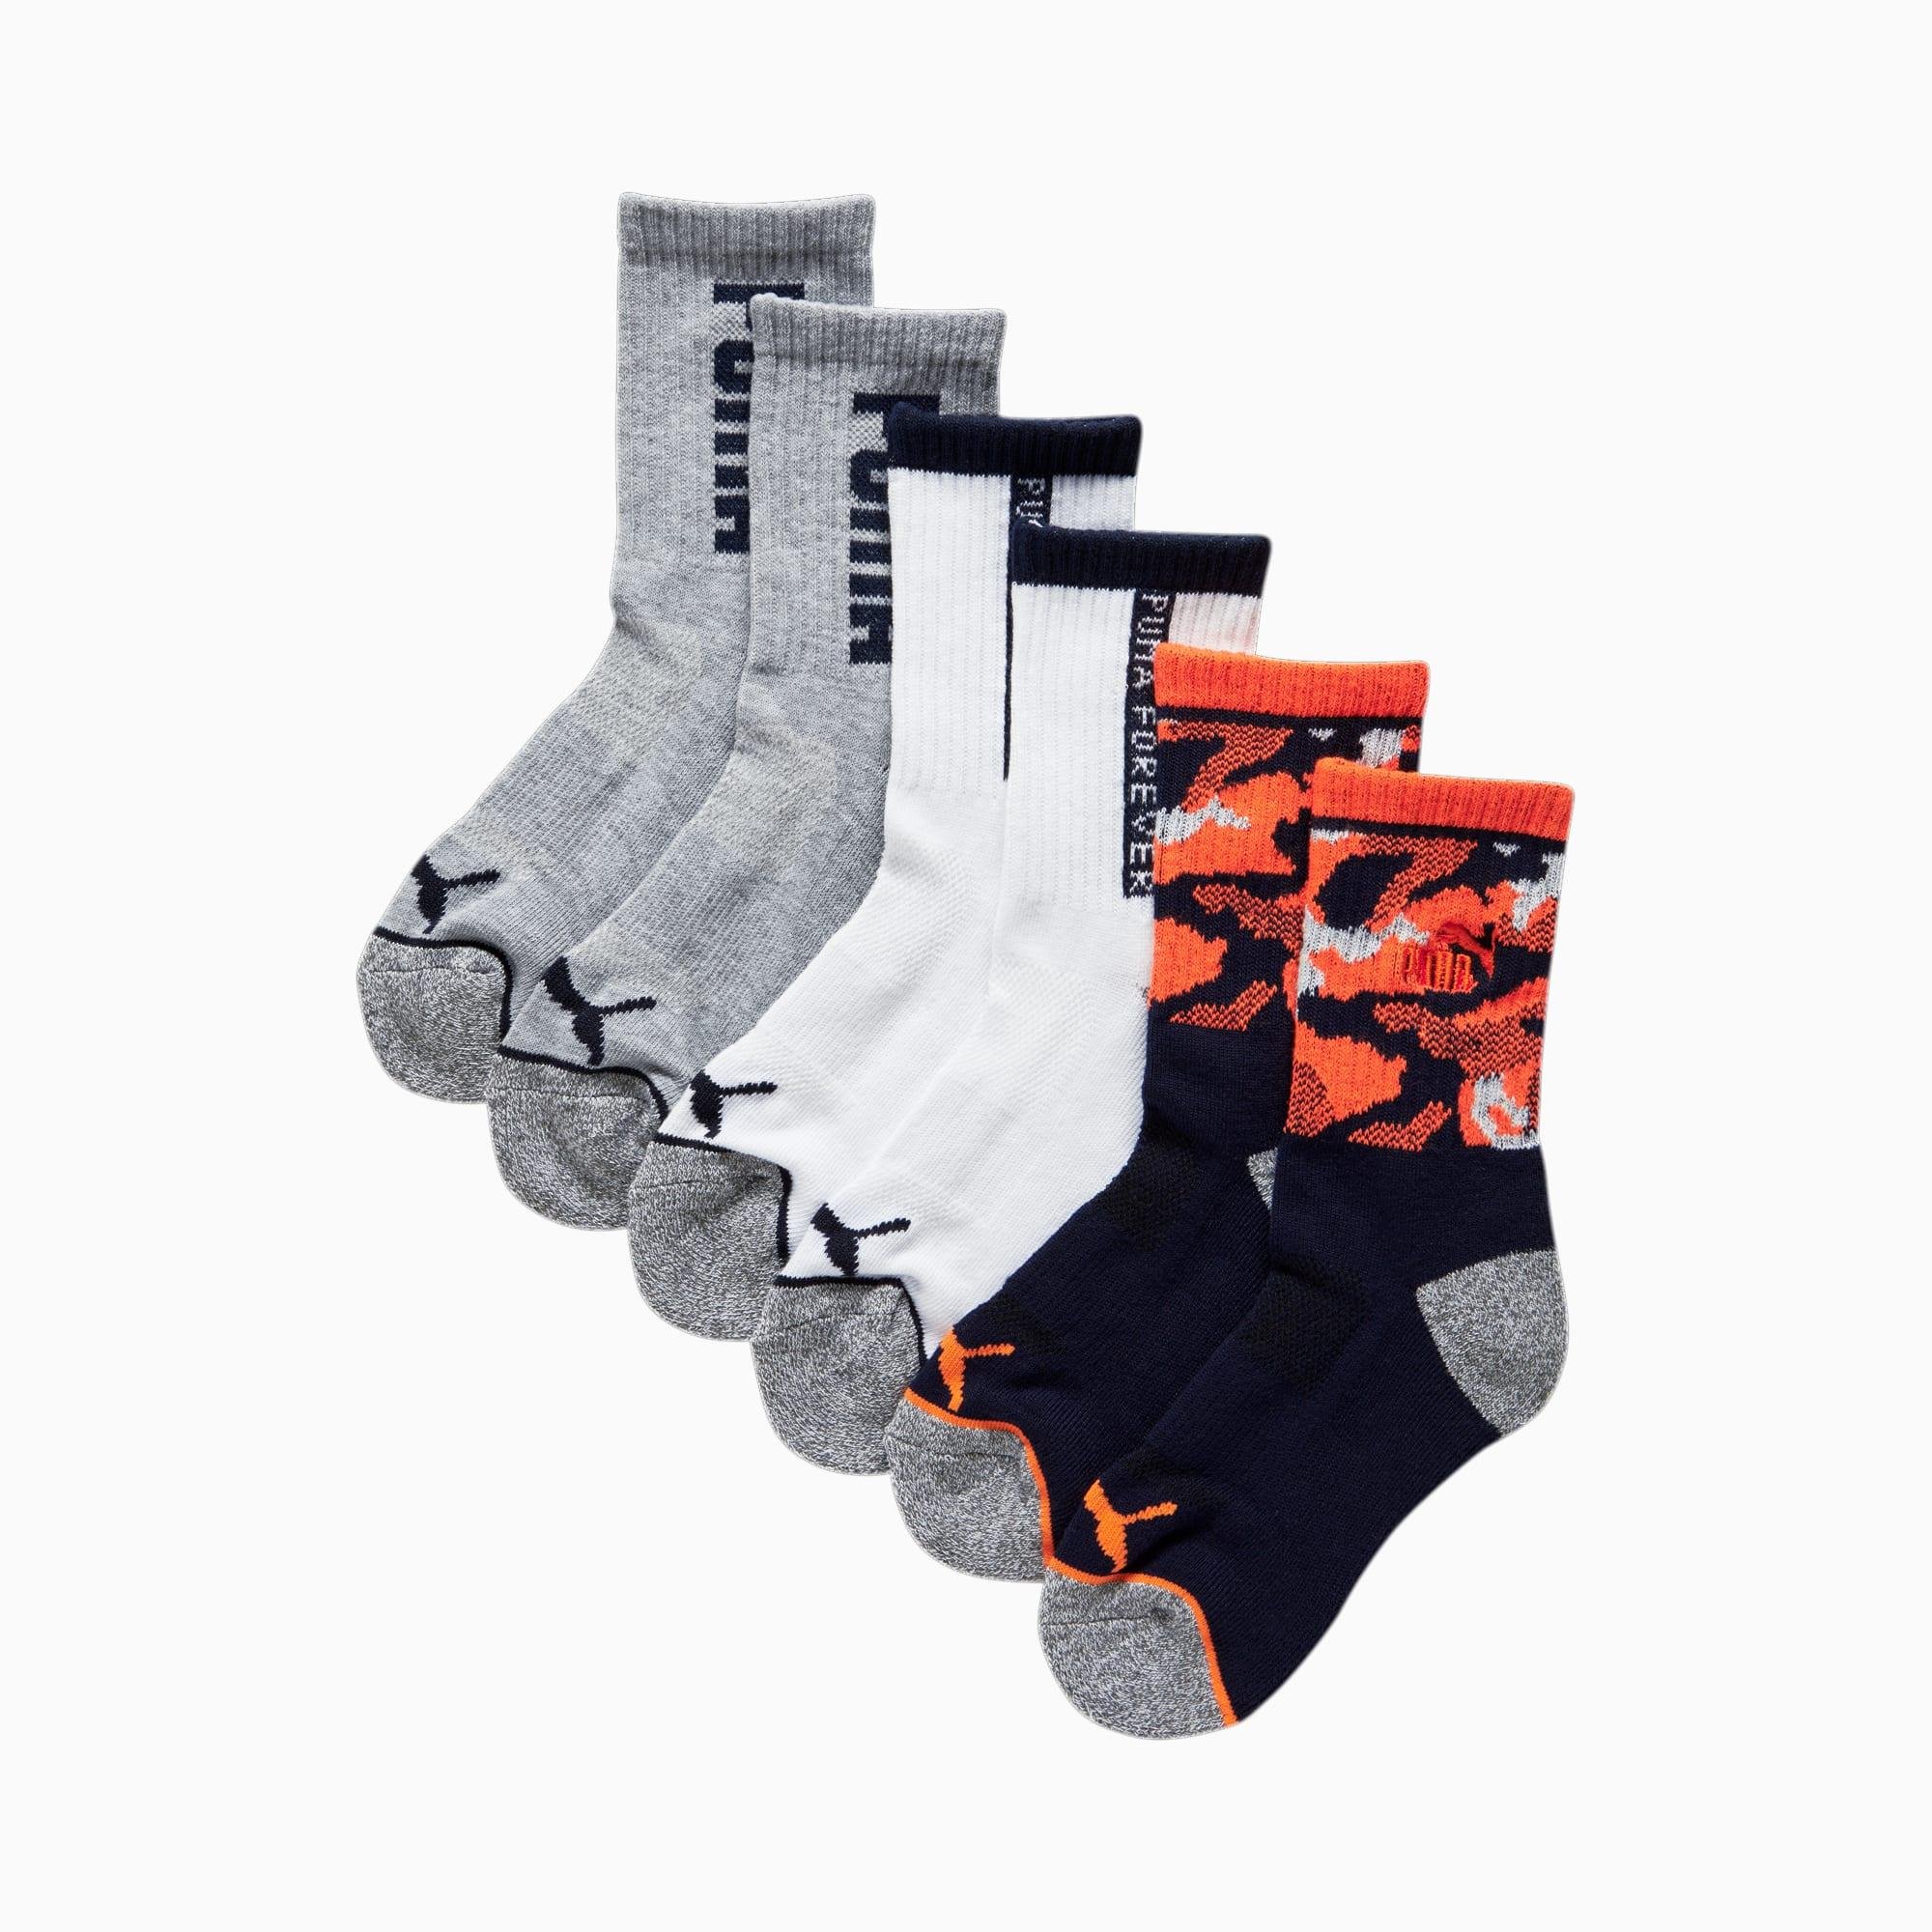 Boys' Half-Terry Quarter Length Socks (3 Pack) by PUMA